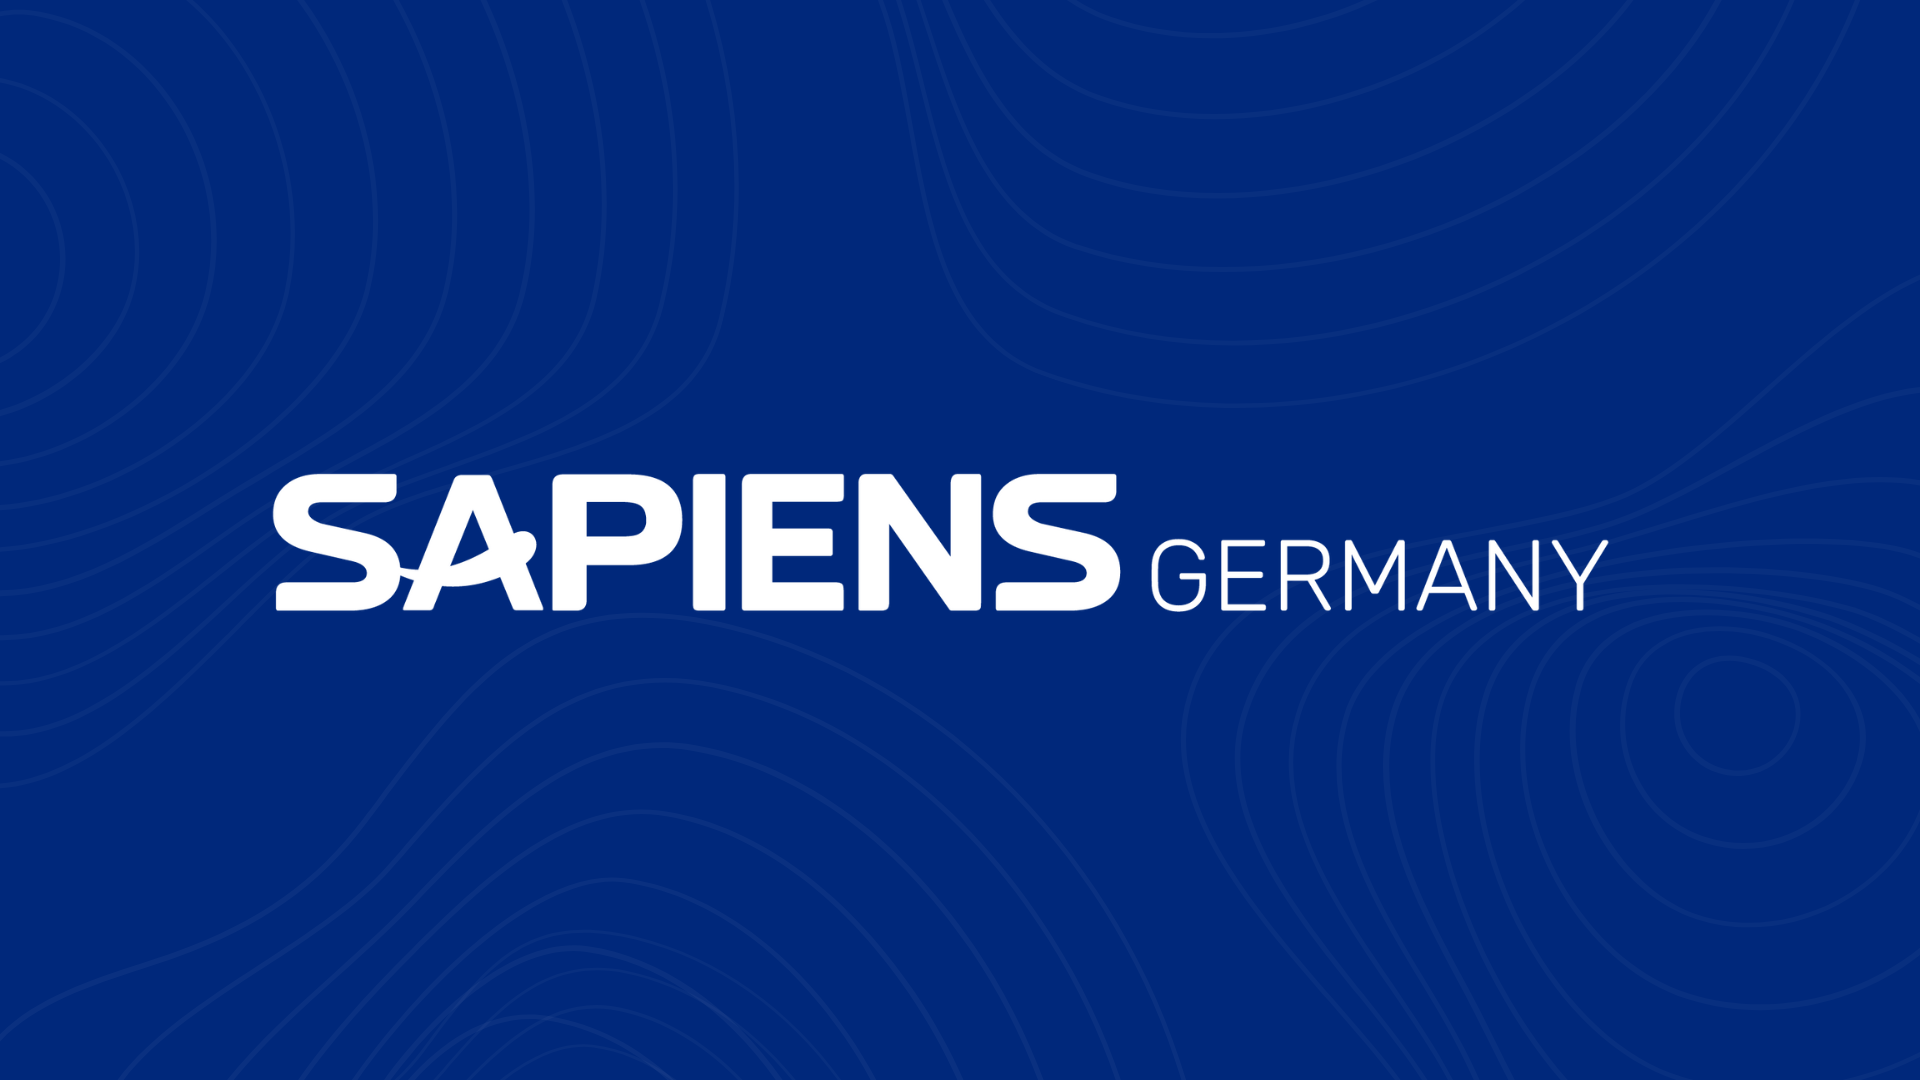 Sapiens Germany